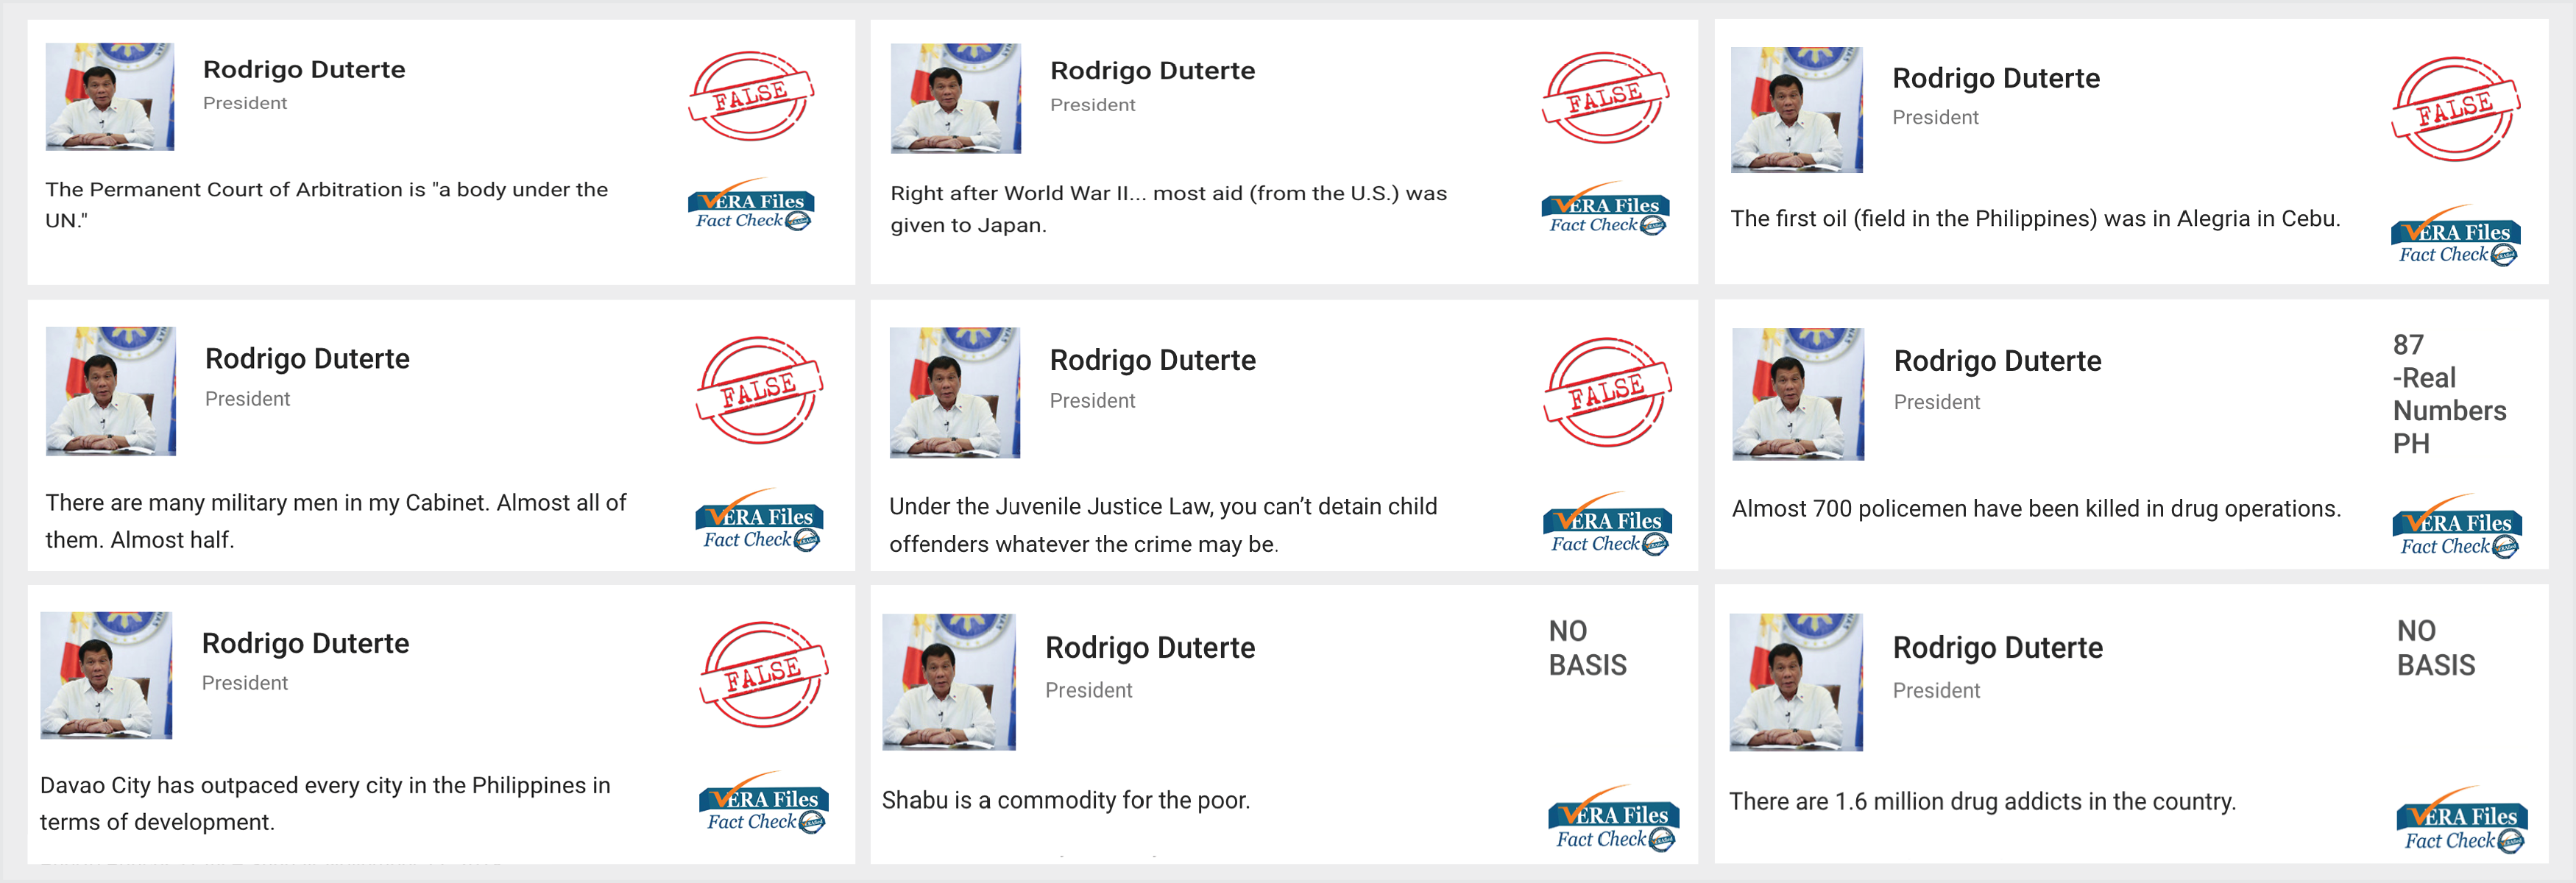 Infog_Duterte 9 false claims (wo header)-2.png